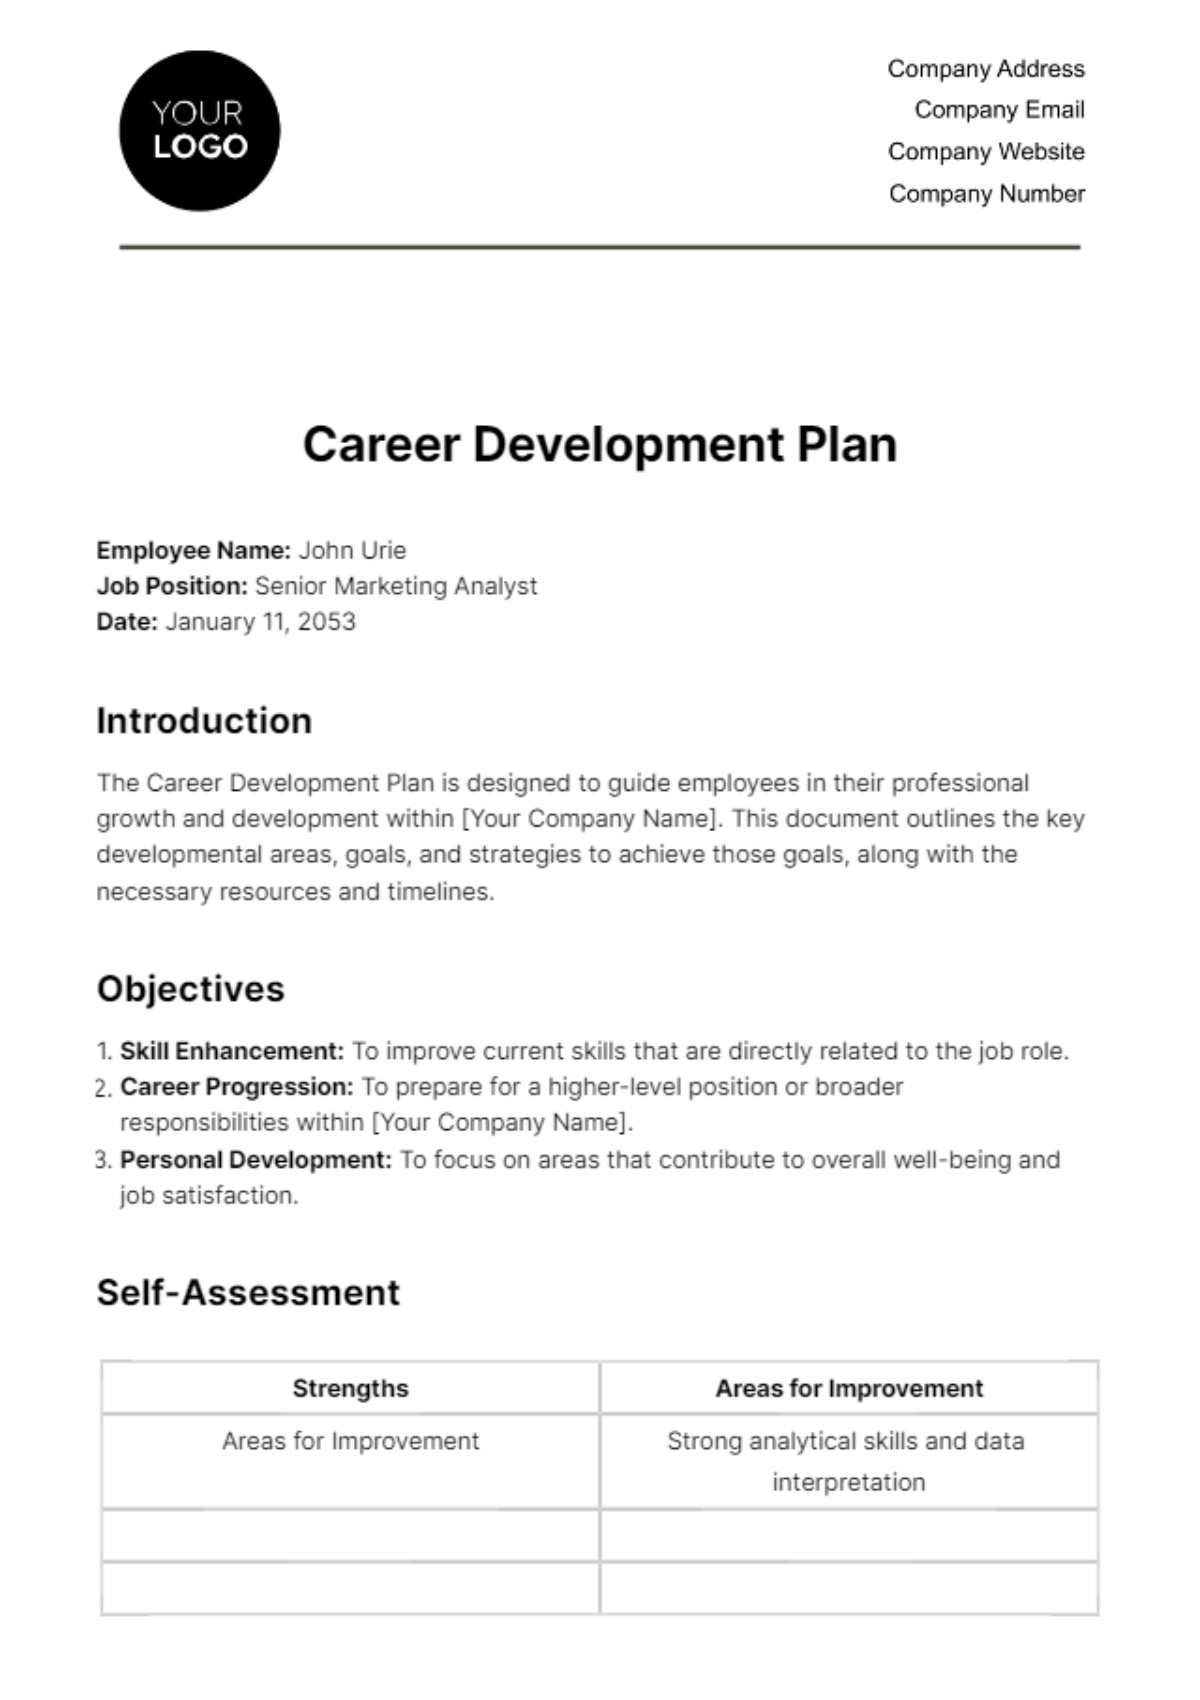 Career Development Plan HR Template